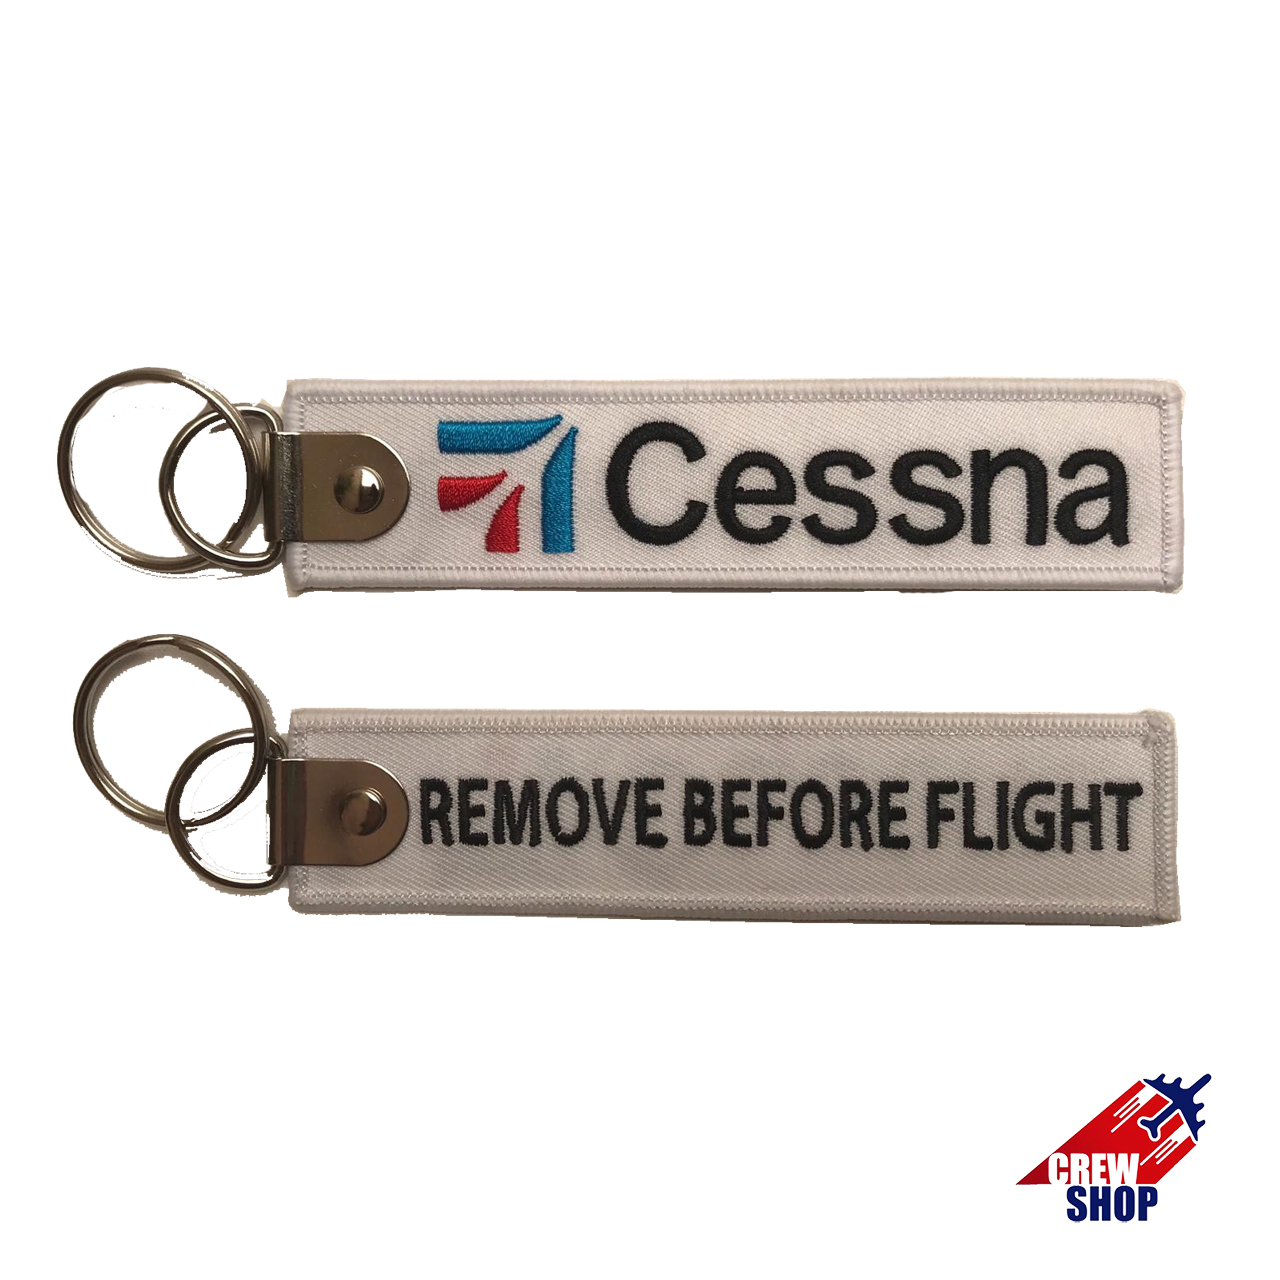 Cessna-REMOVE BEFORE FLIGHT 